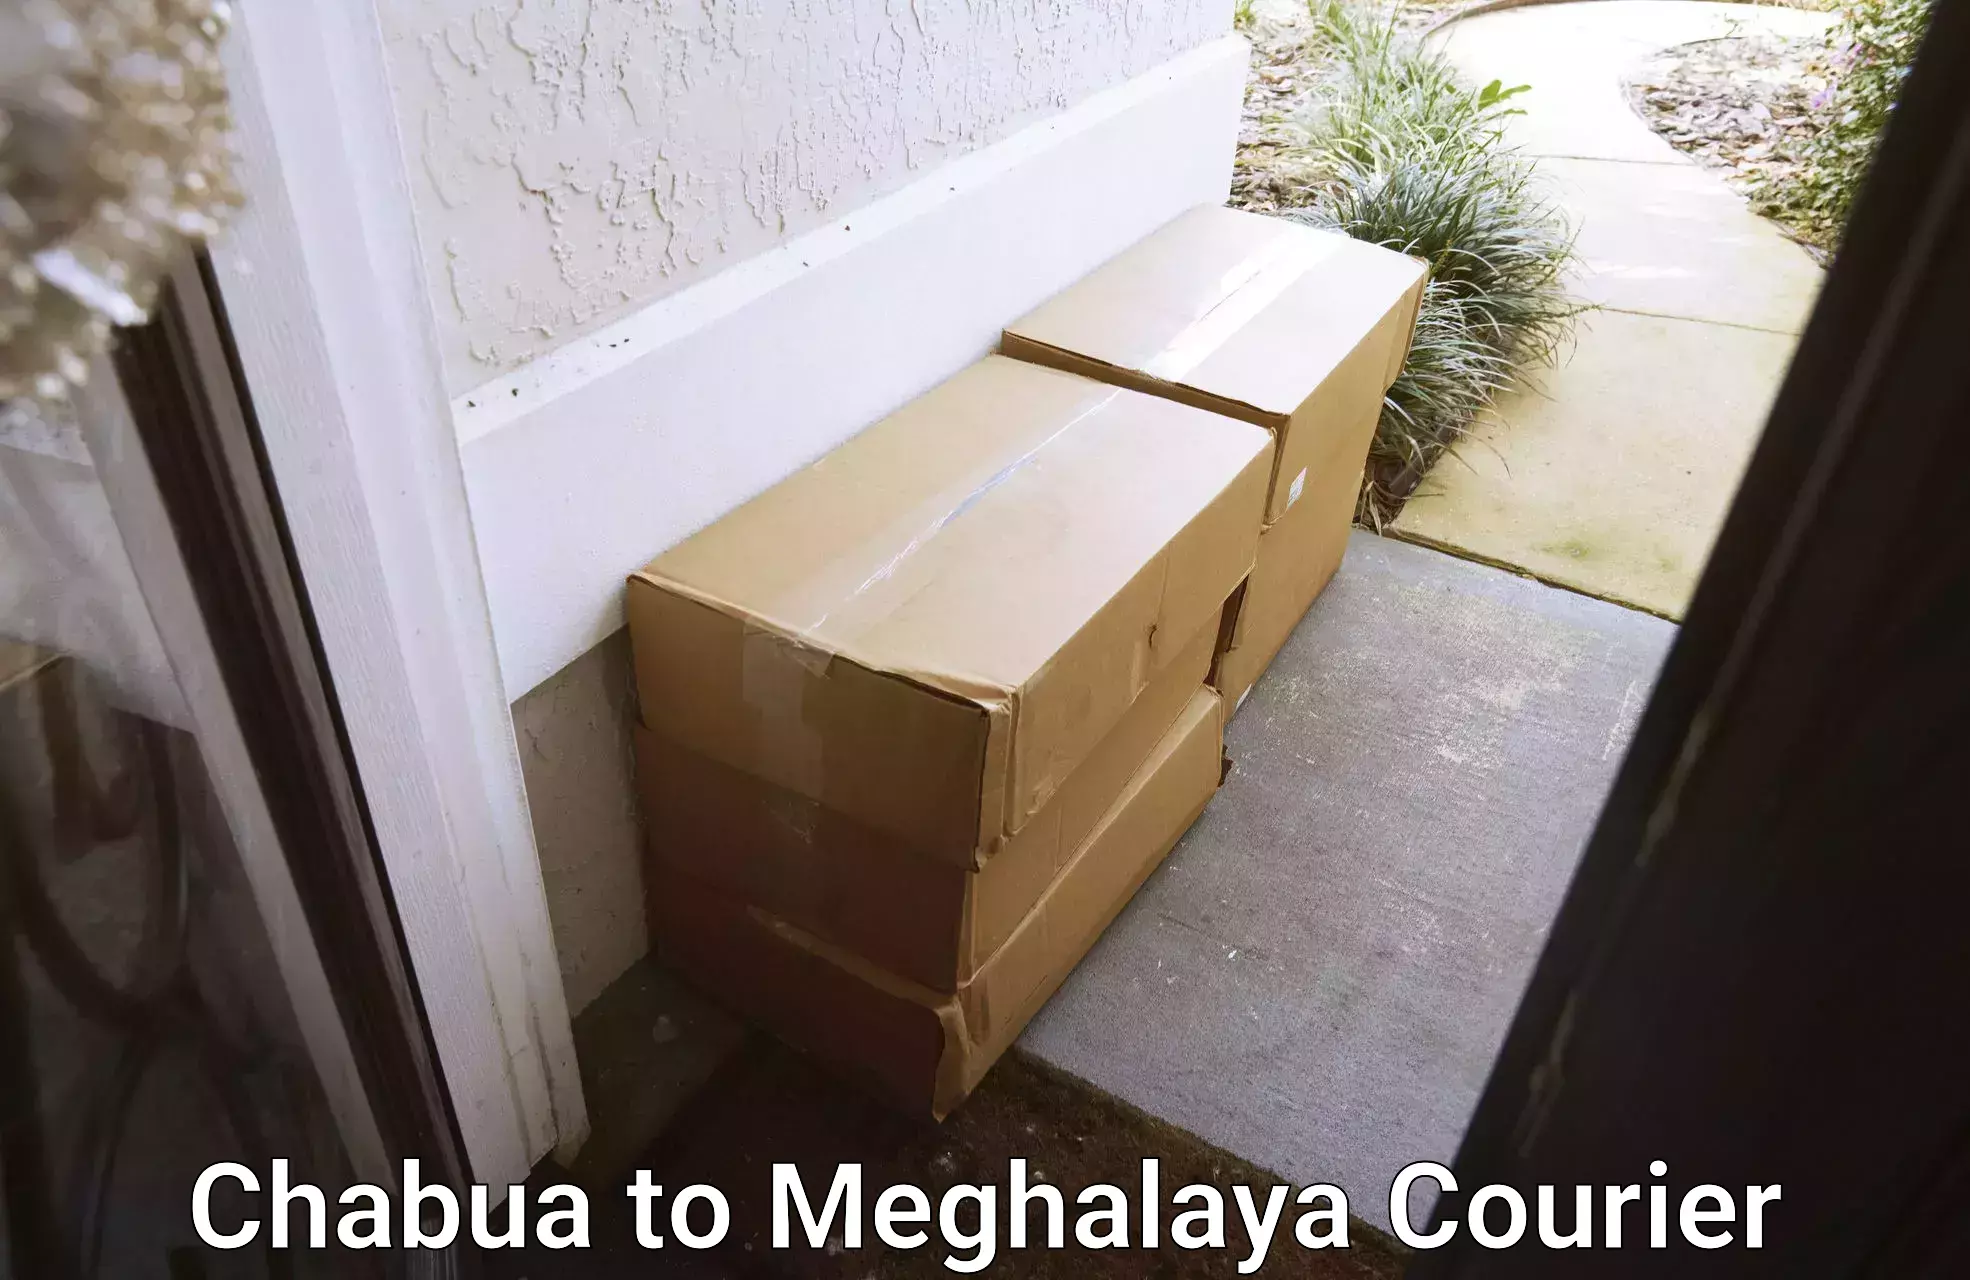 Cash on delivery service Chabua to Meghalaya